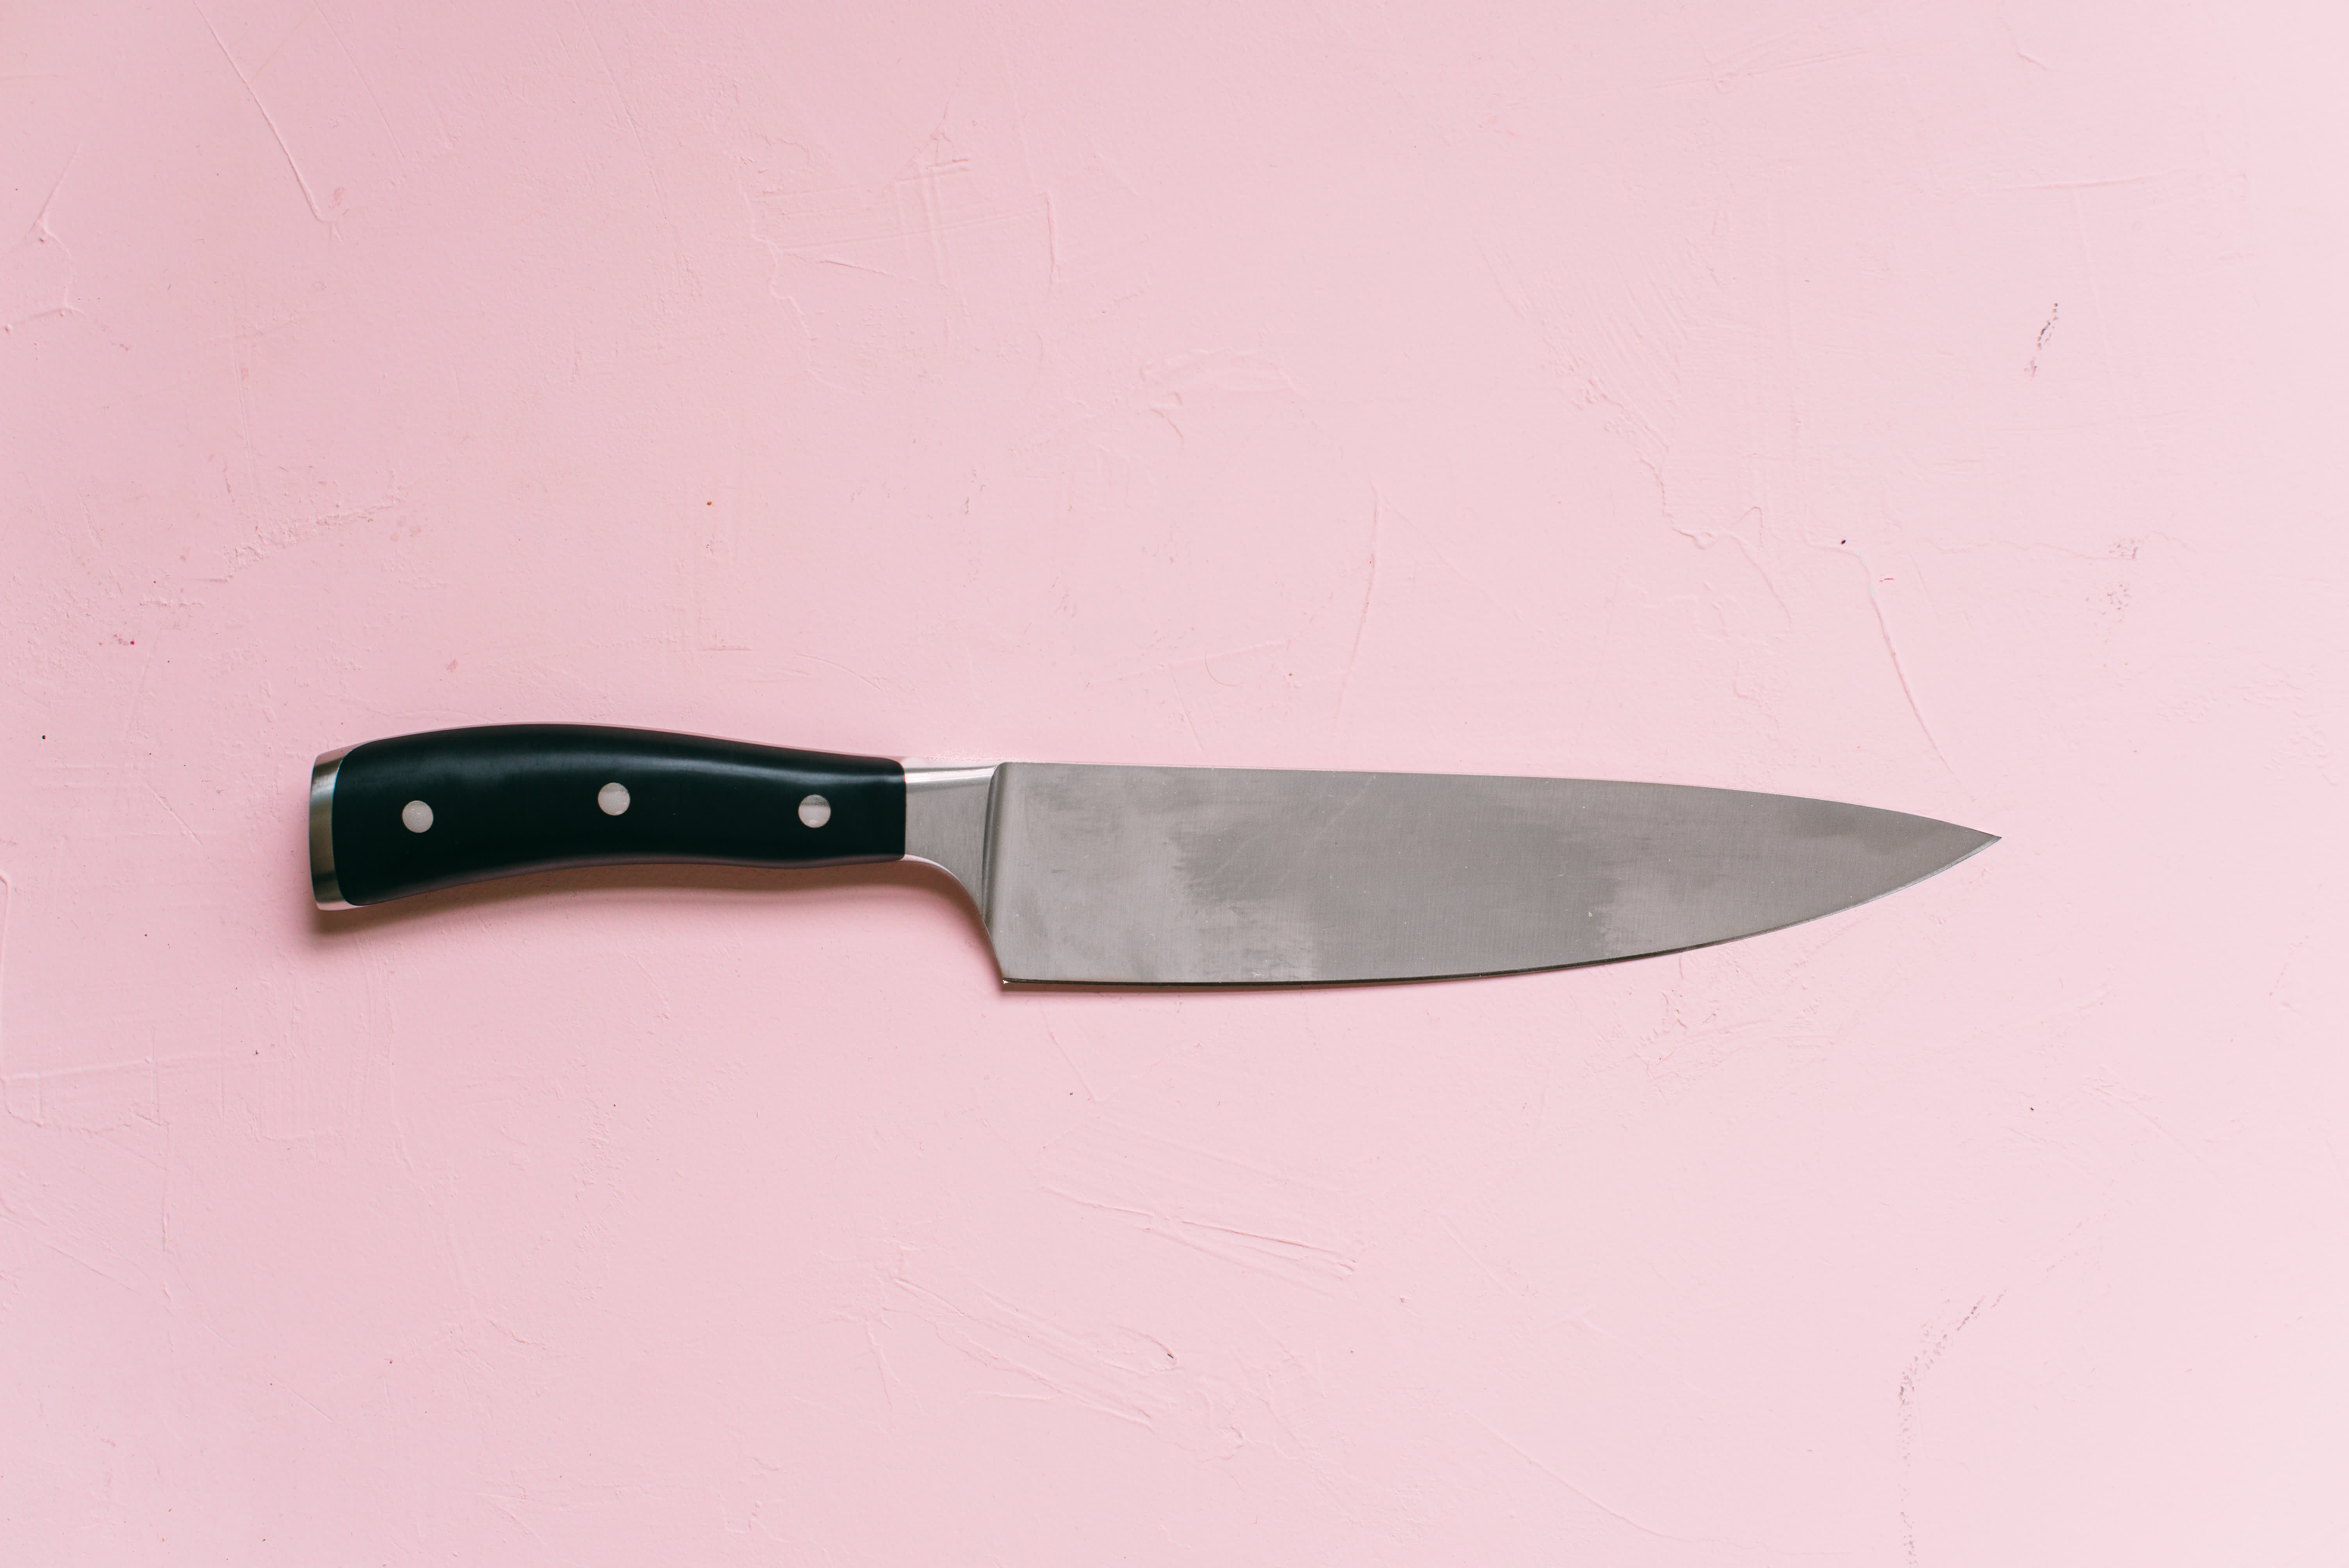 The Three Kitchen Knives Everyone Needs